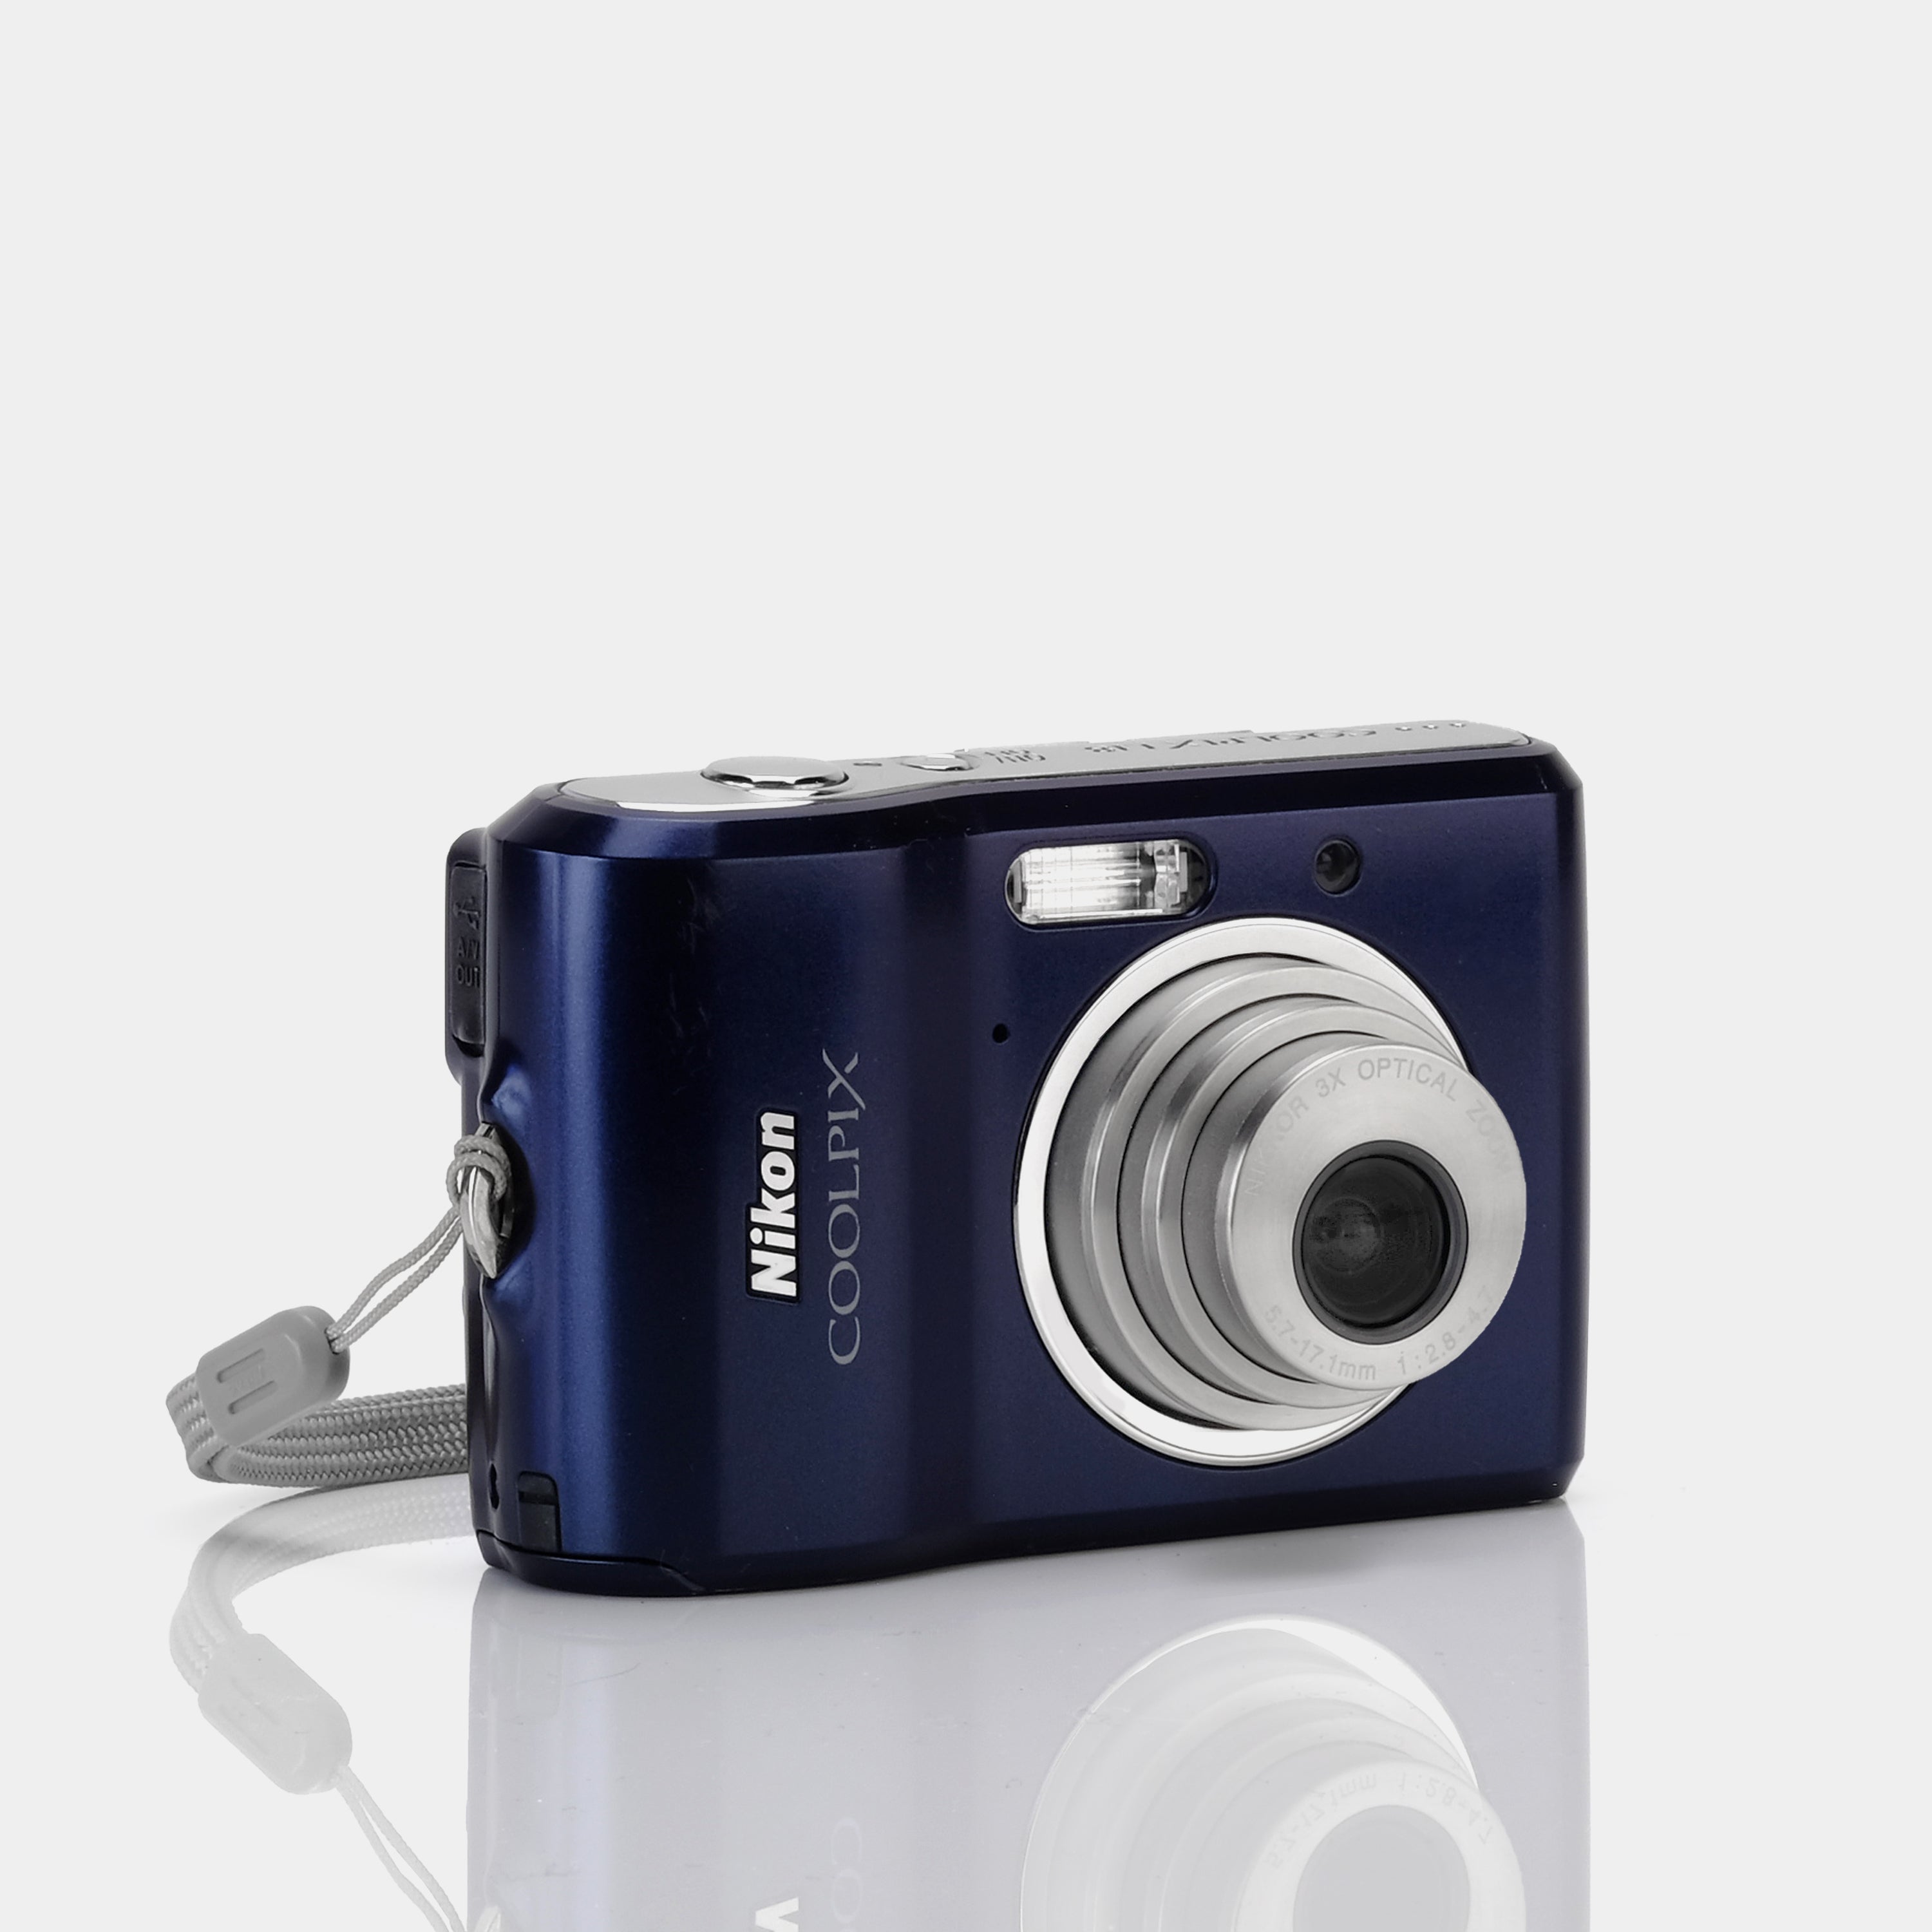 Nikon Coolpix L18 Blue Point and Shoot Digital Camera